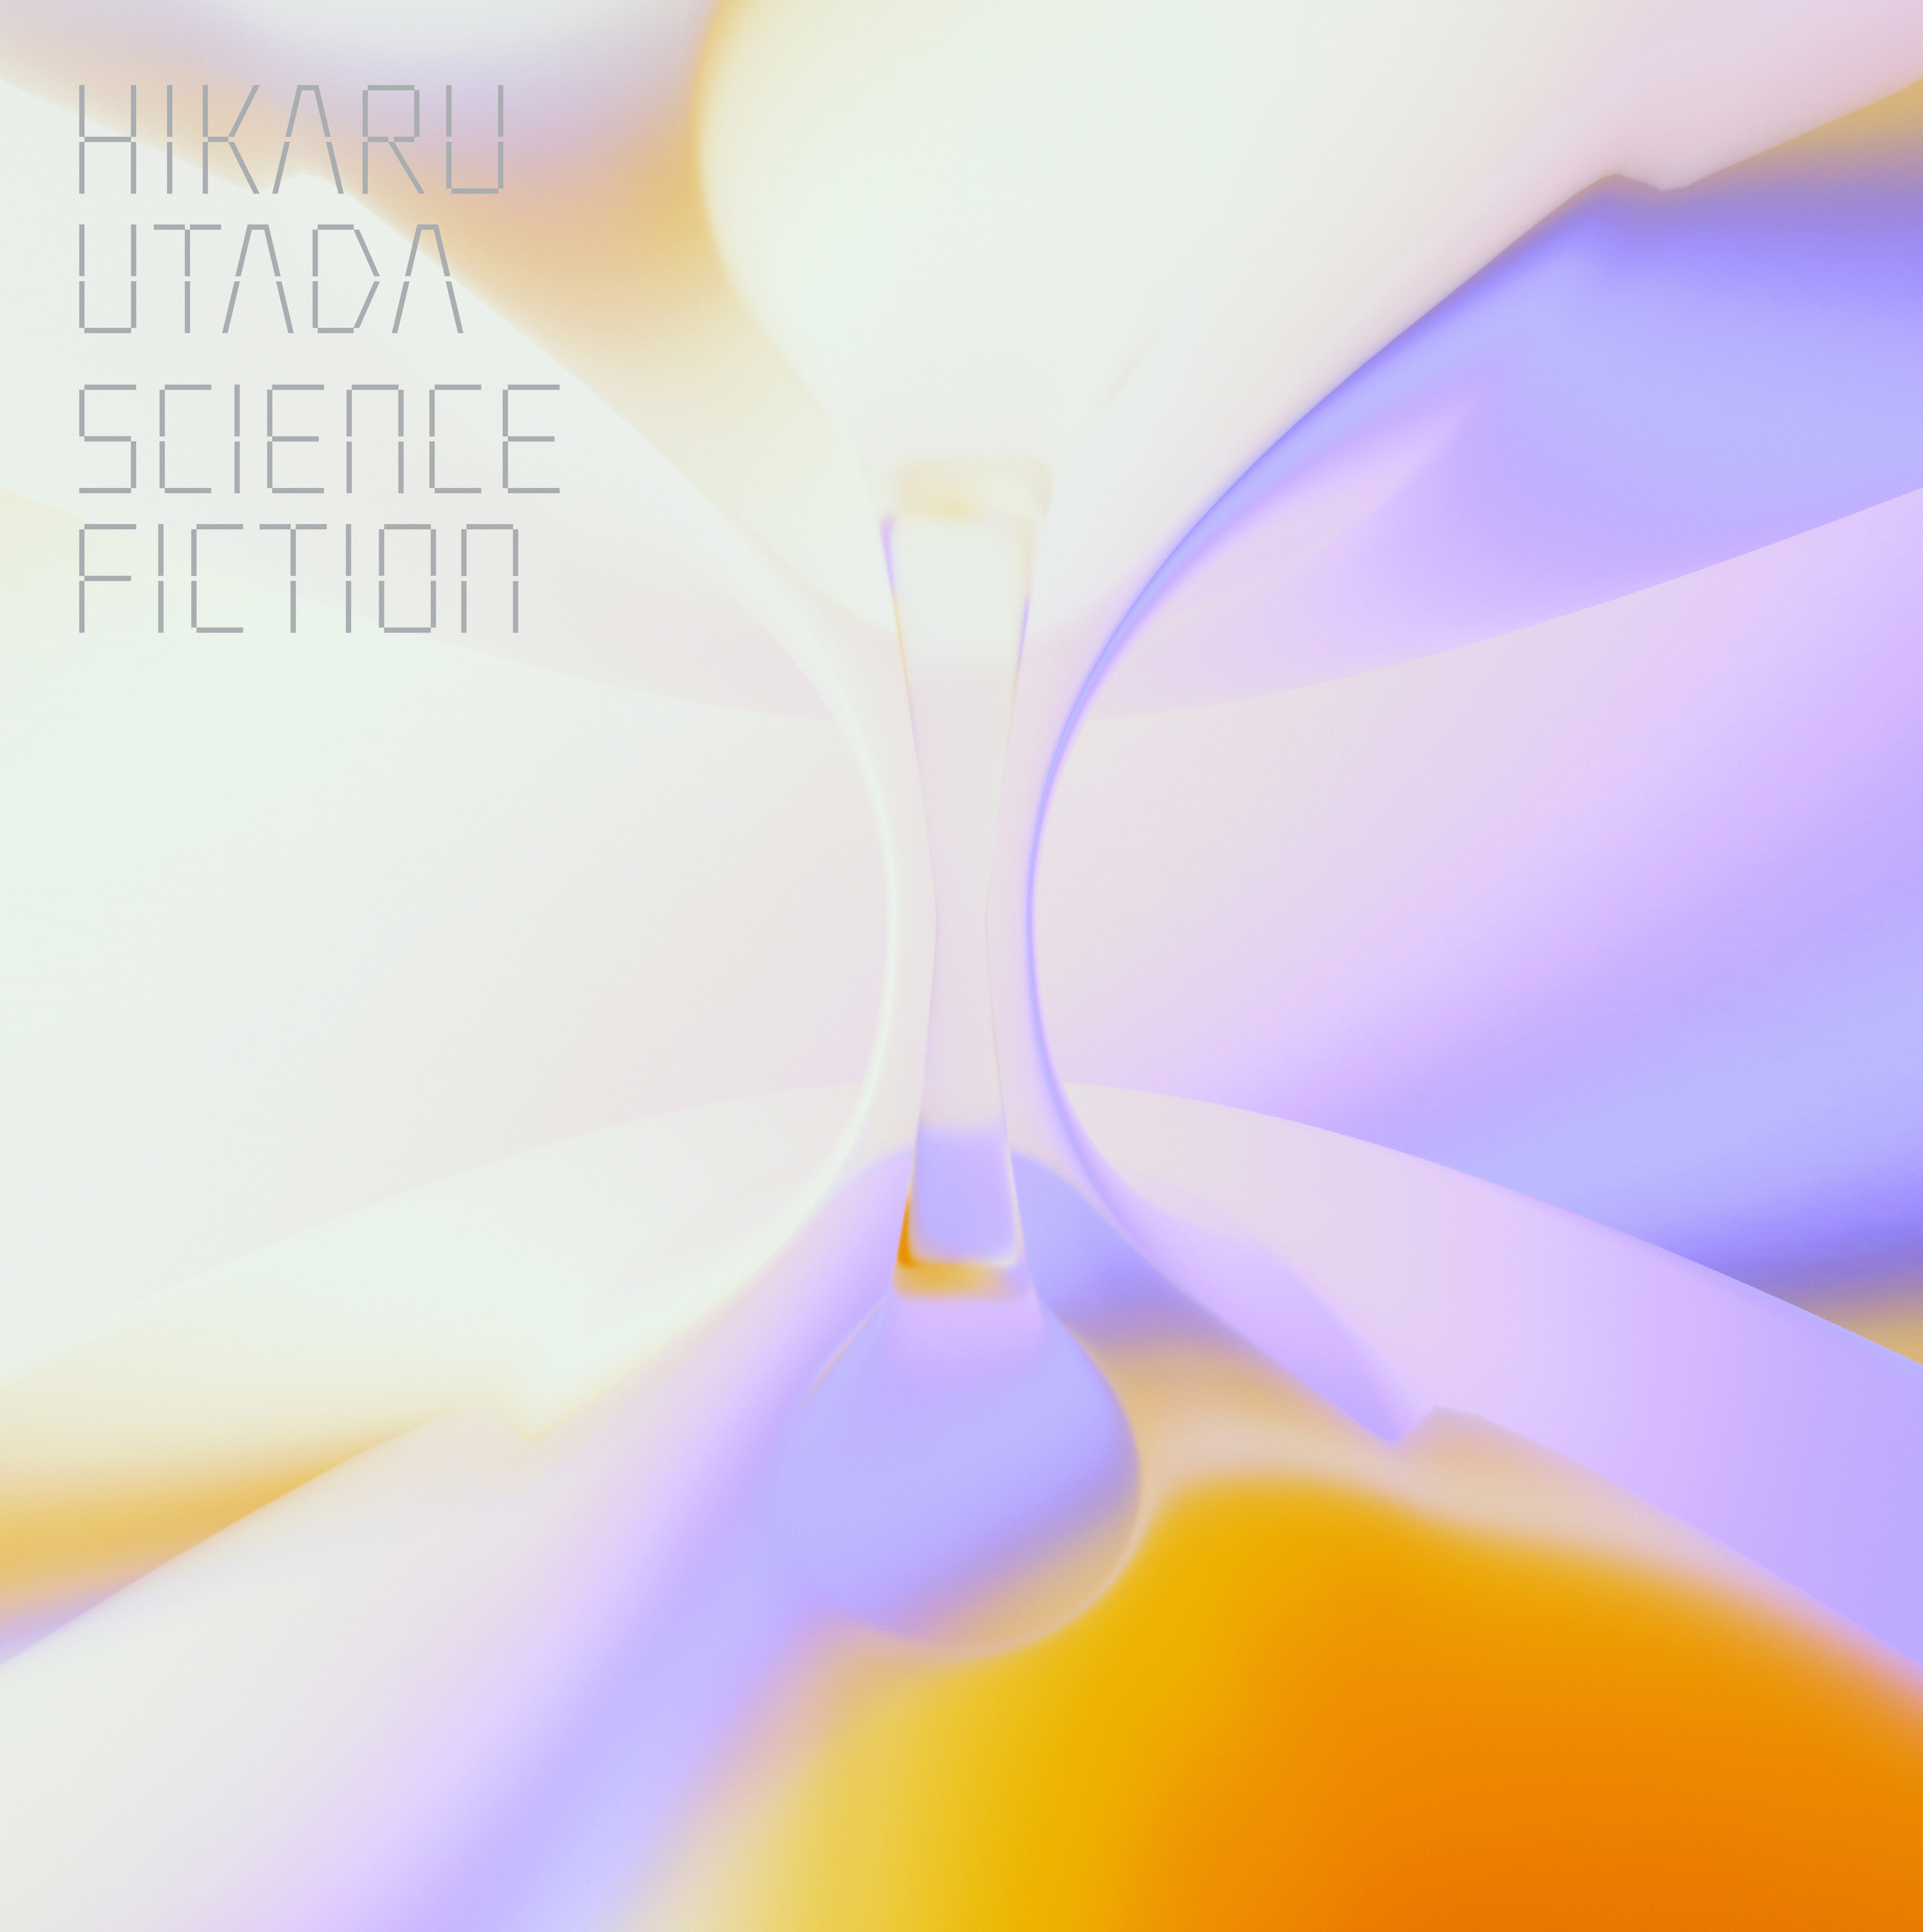 SCIENCE FICTION」 6月26日にアナログ盤 生産限定発売が決定 | HIKARU 